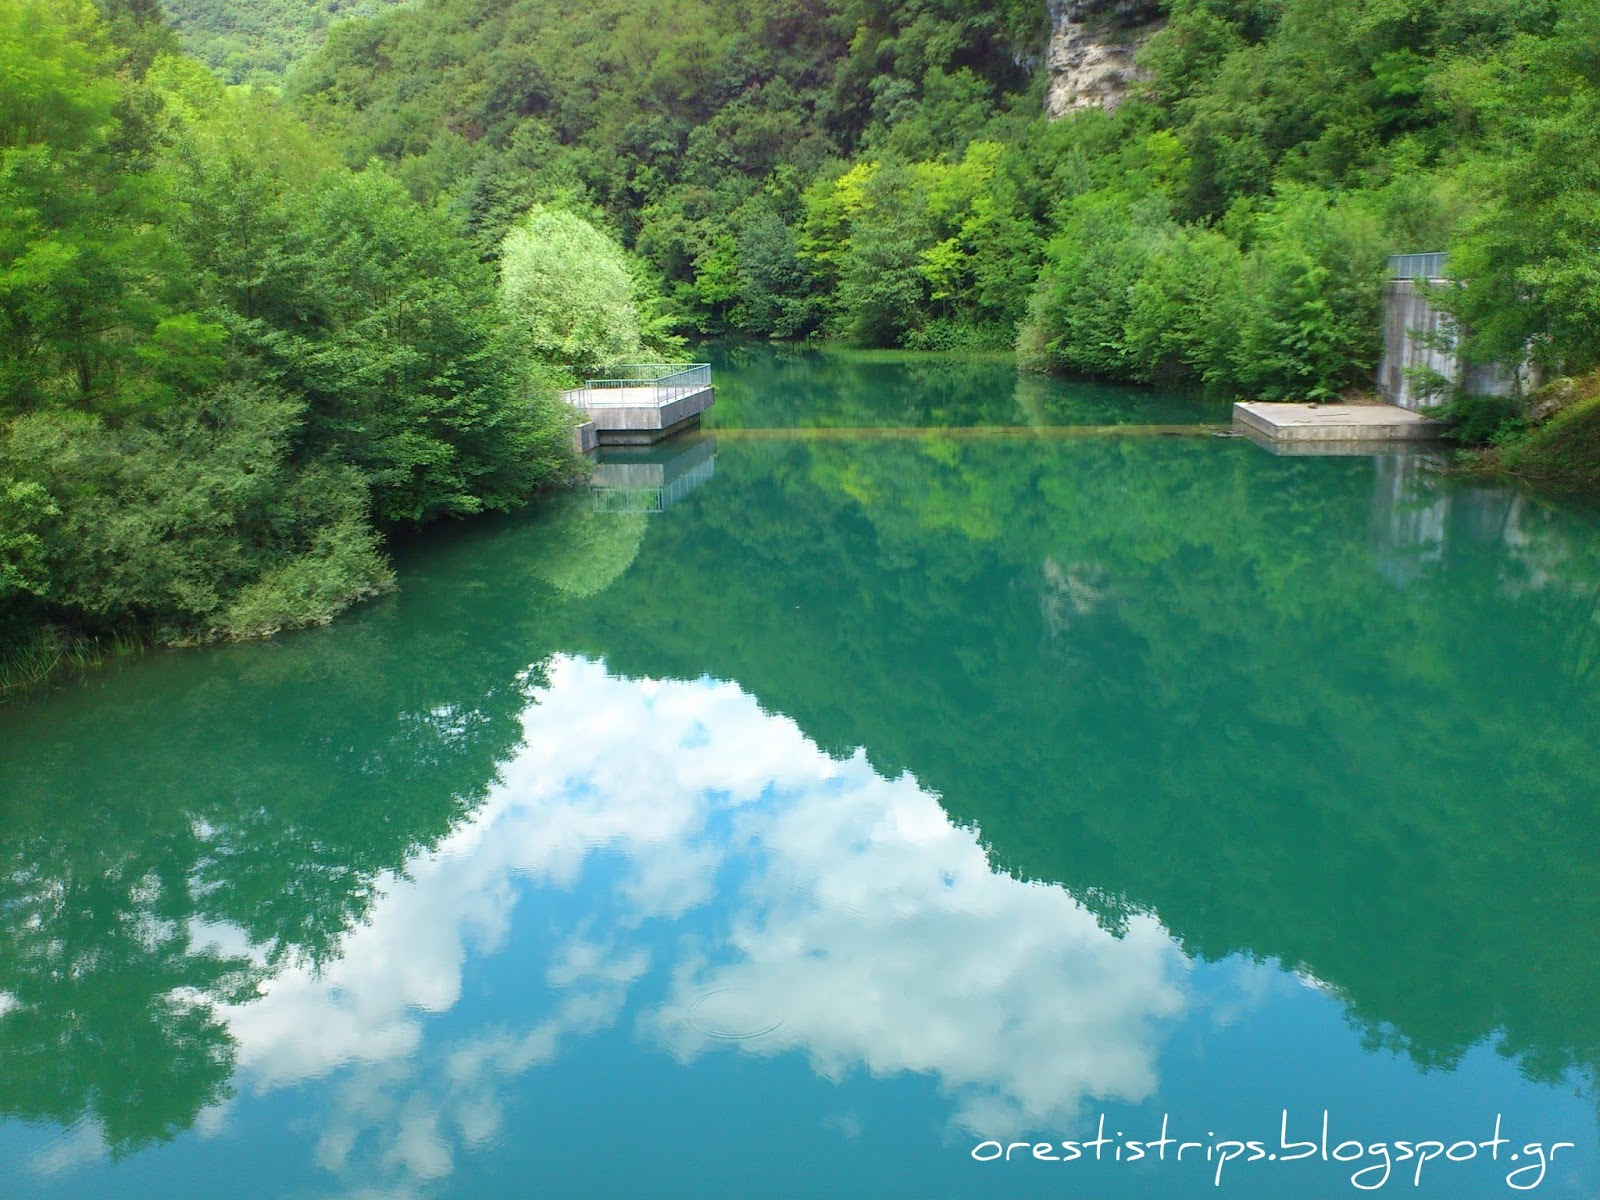 Artificial lake or green mirror? Both.